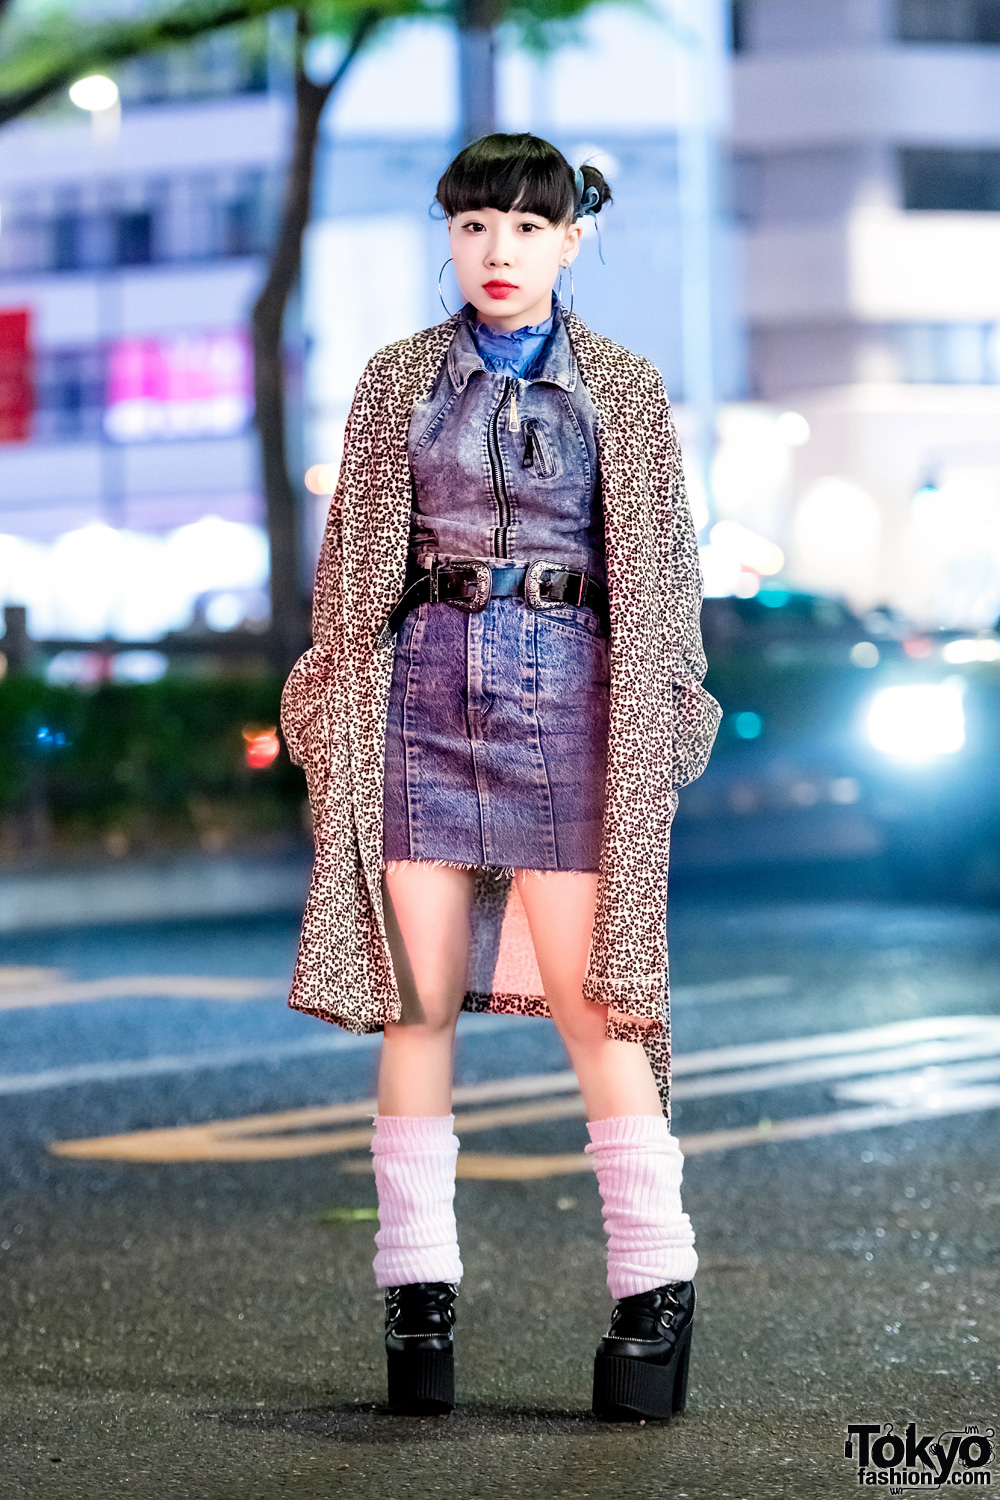 Harajuku Street Style w/ Leopard Print Coat, Remake Denim Skirt